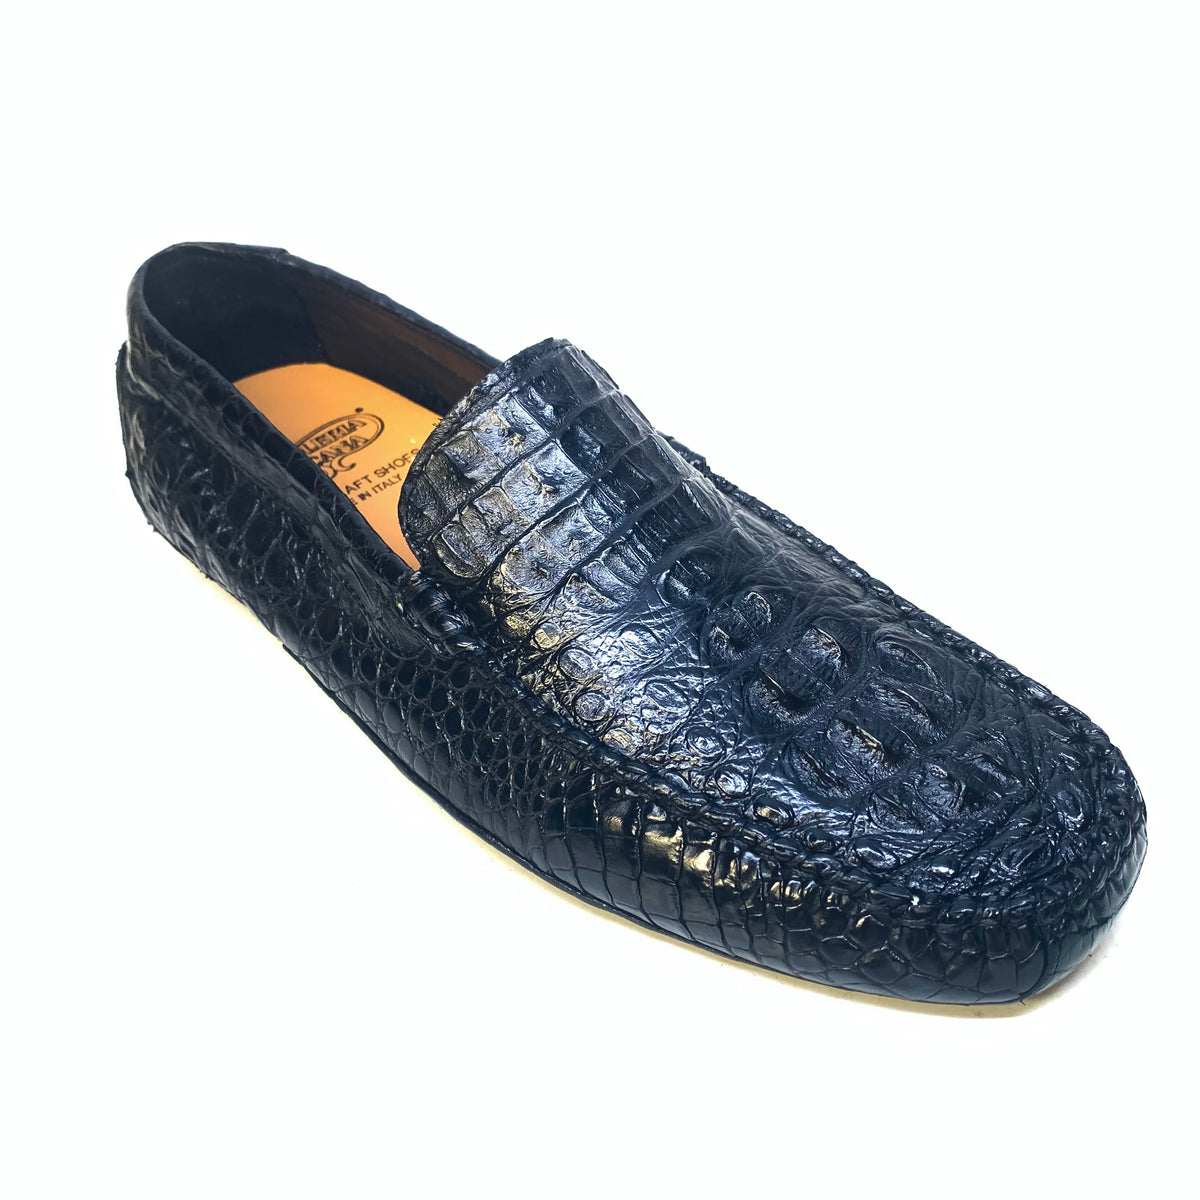 Calzoleria Toscana Black Hornback Crocodile Loafers - Dudes Boutique